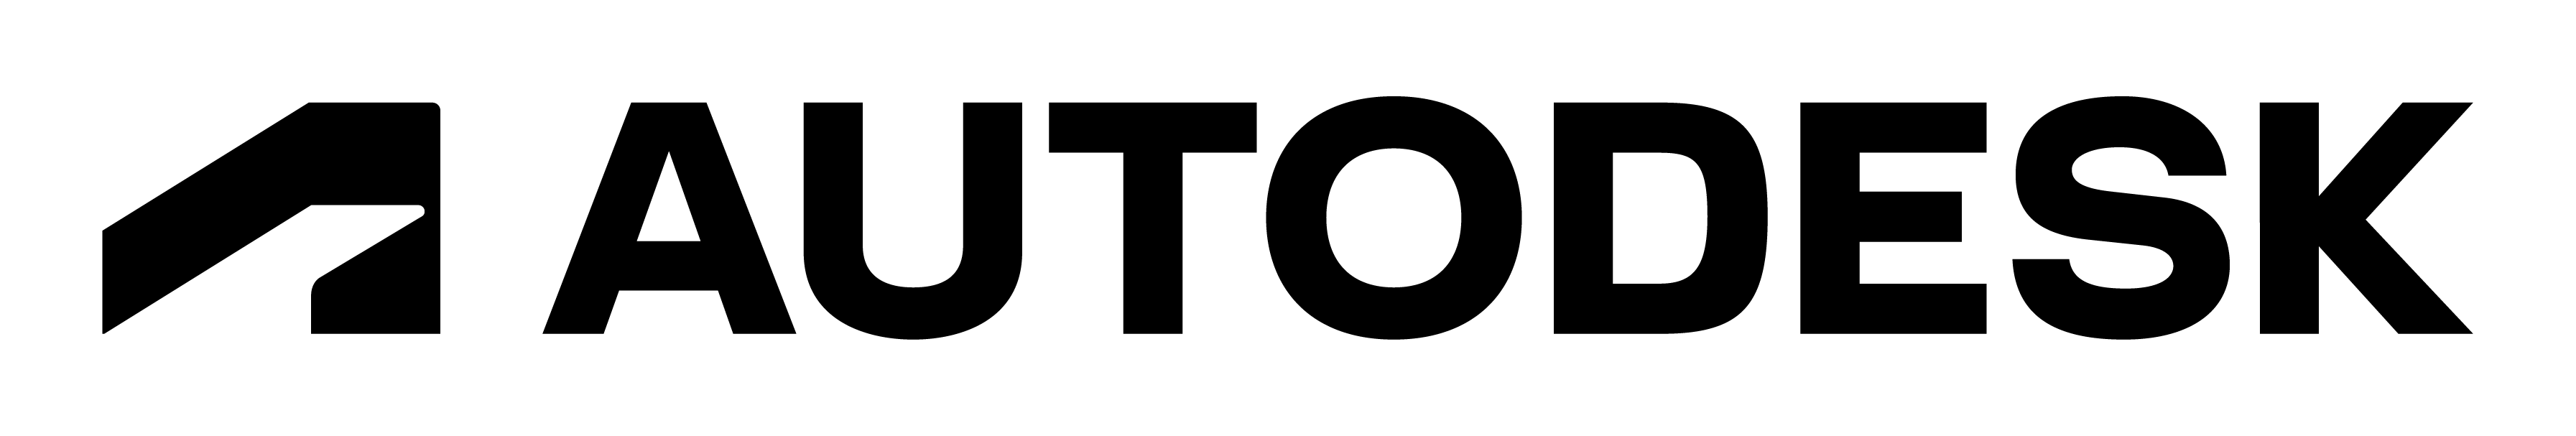 Autodesk-black-logo (de-DE)